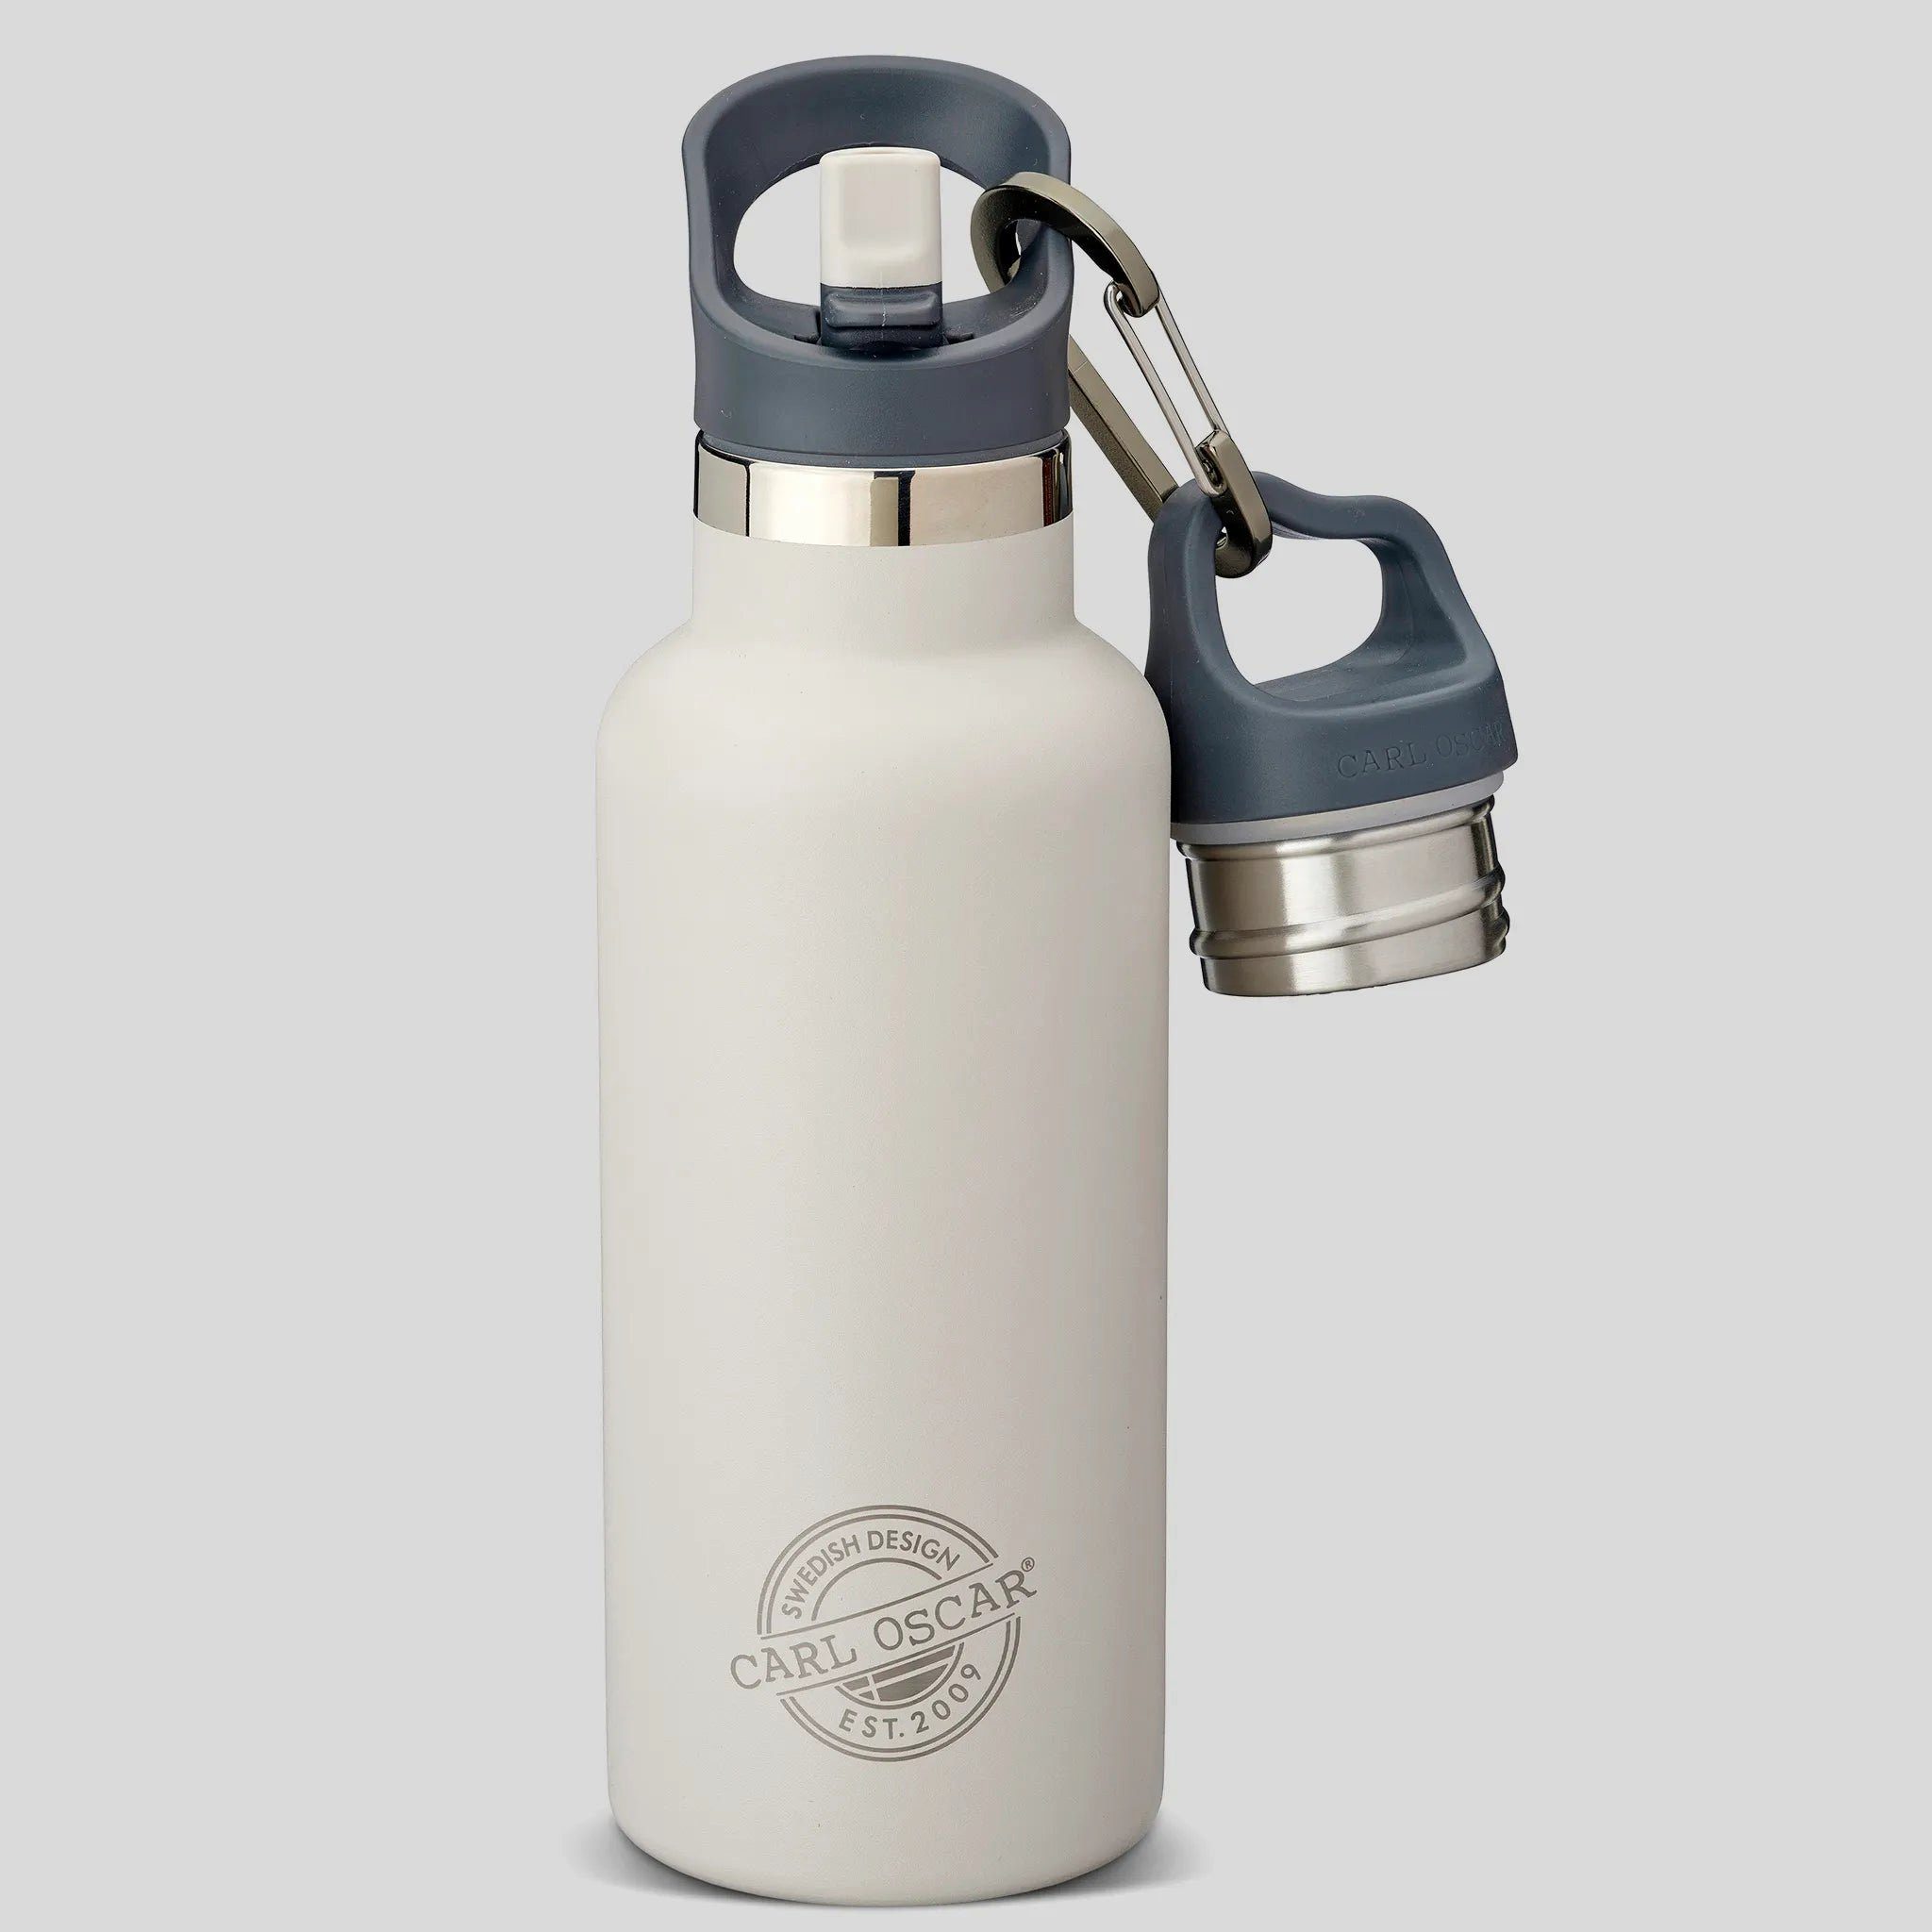 Carl Oscar Isolierflasche Carl Oscar TEMPflask™ 0,5 L Kühlflasche - Grau | Isolierflaschen